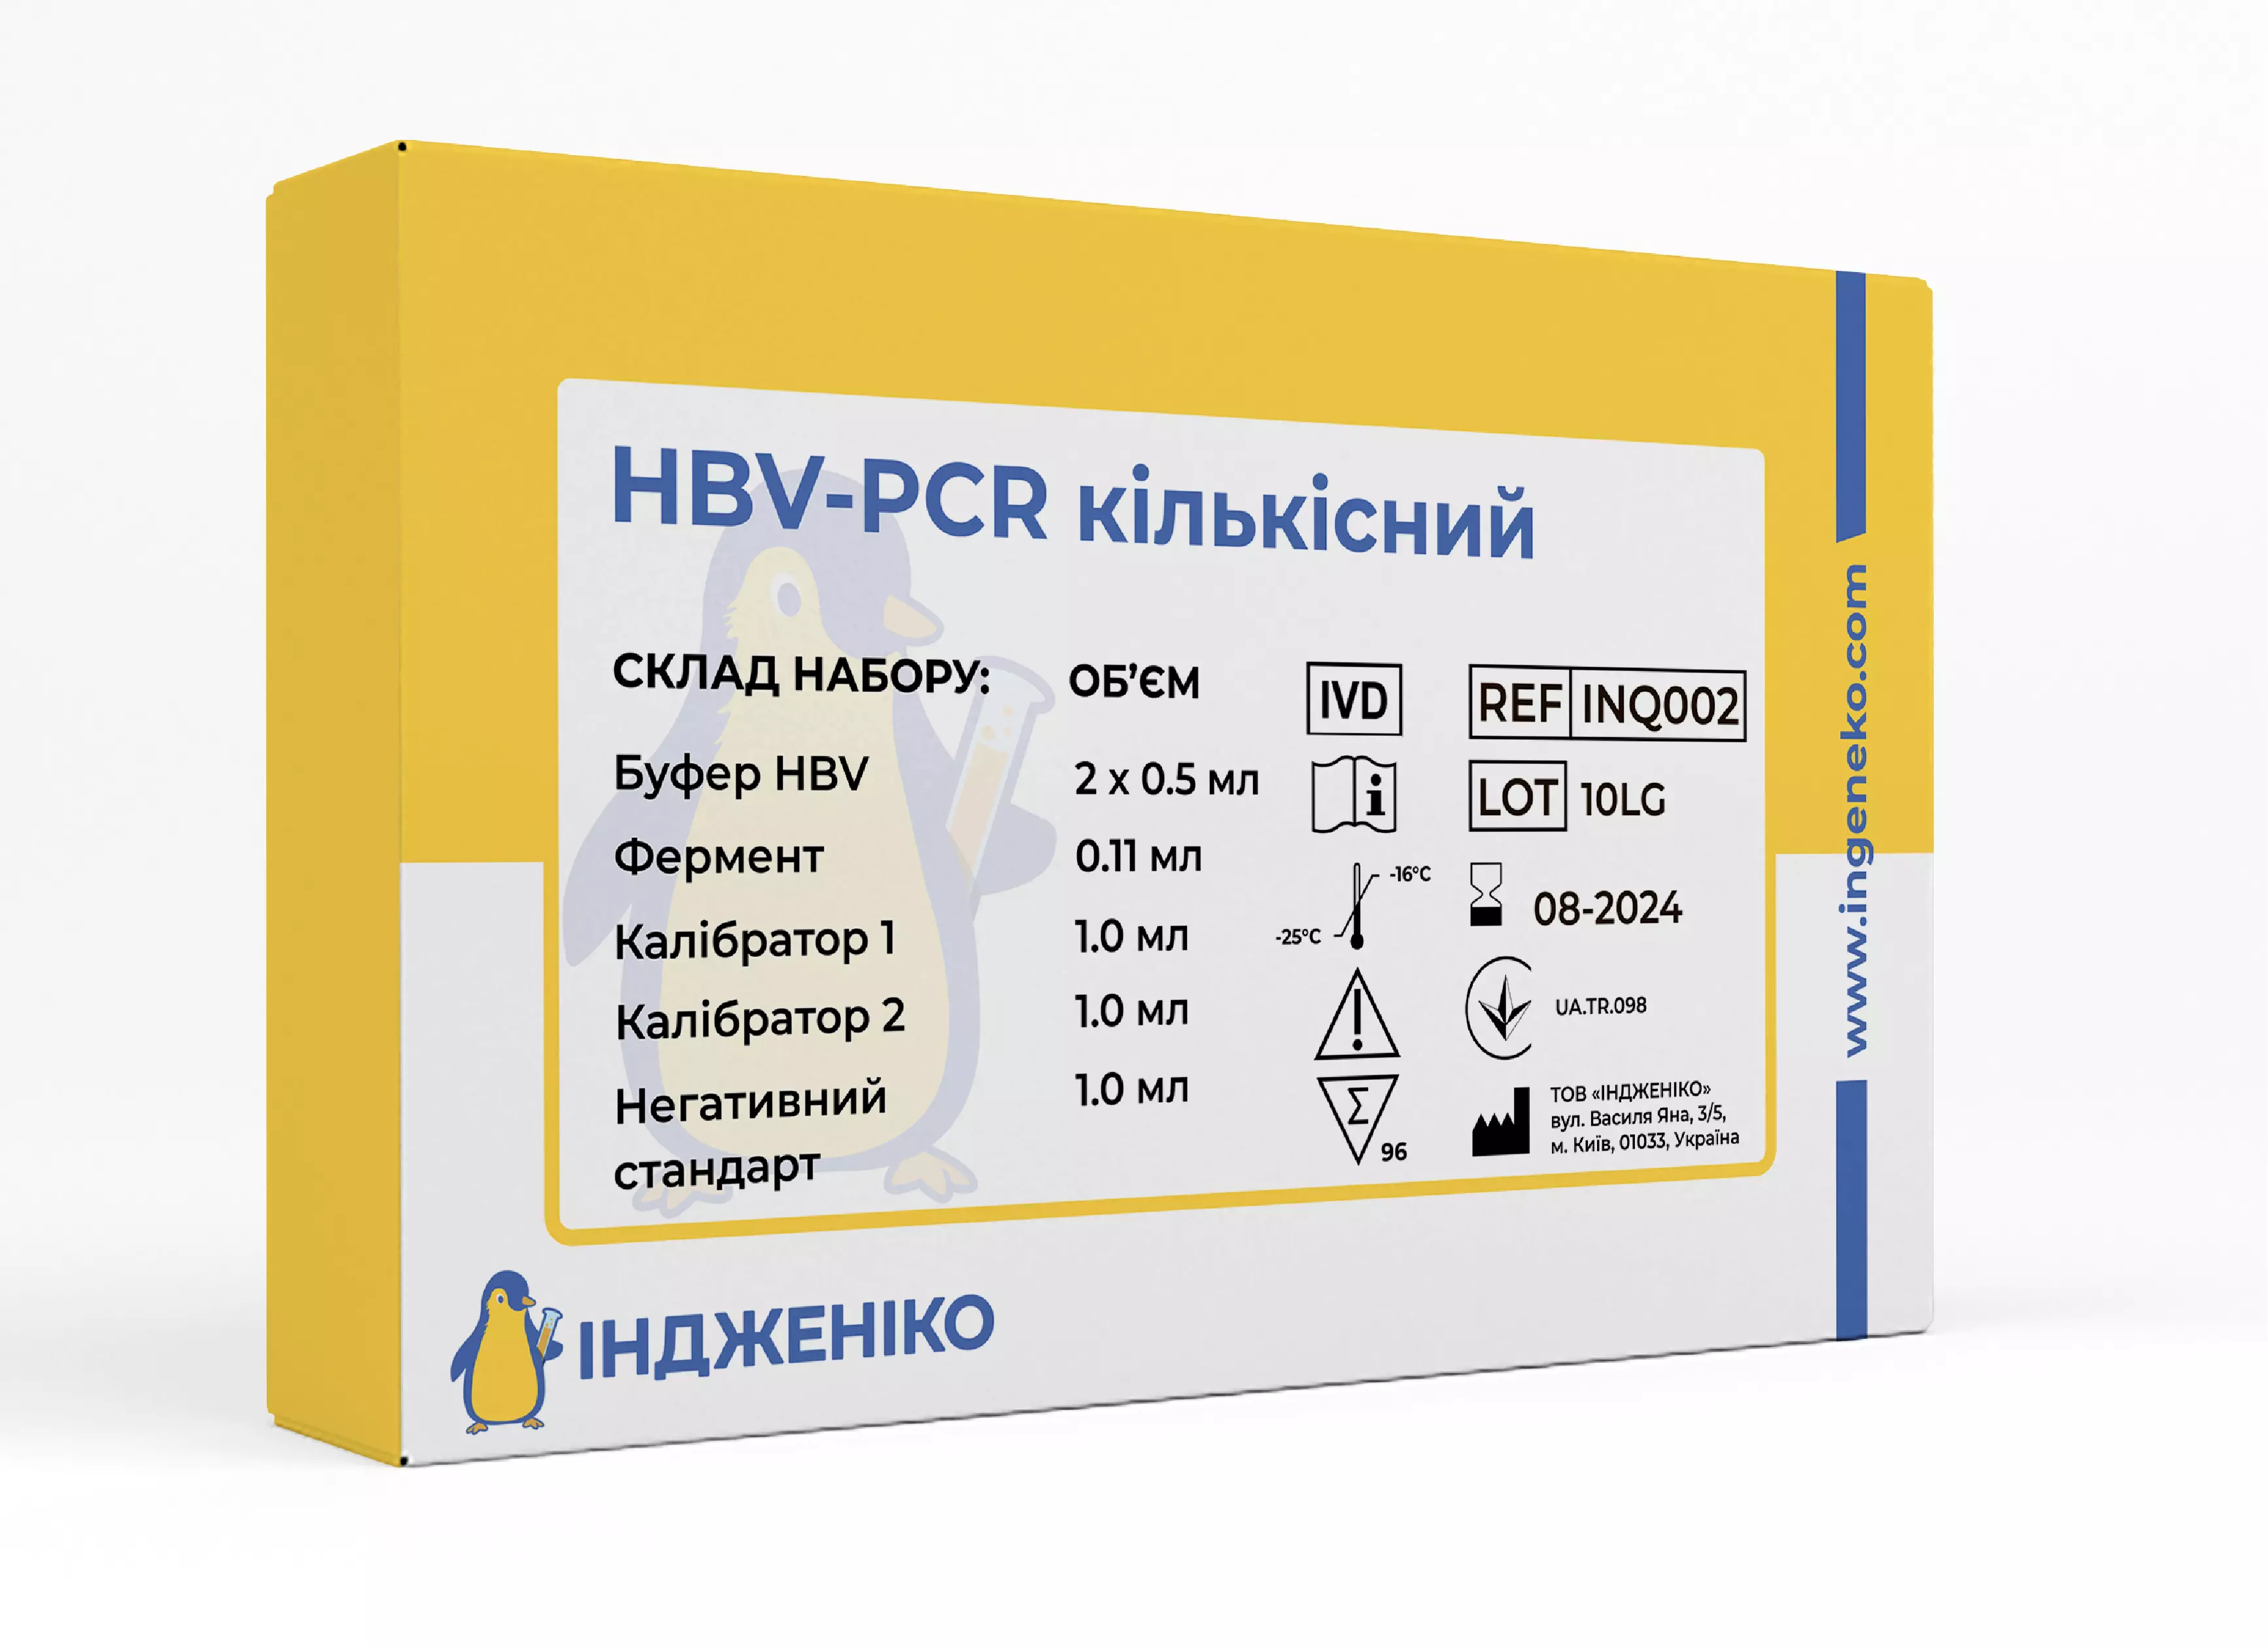 HBV-PCR quantitative